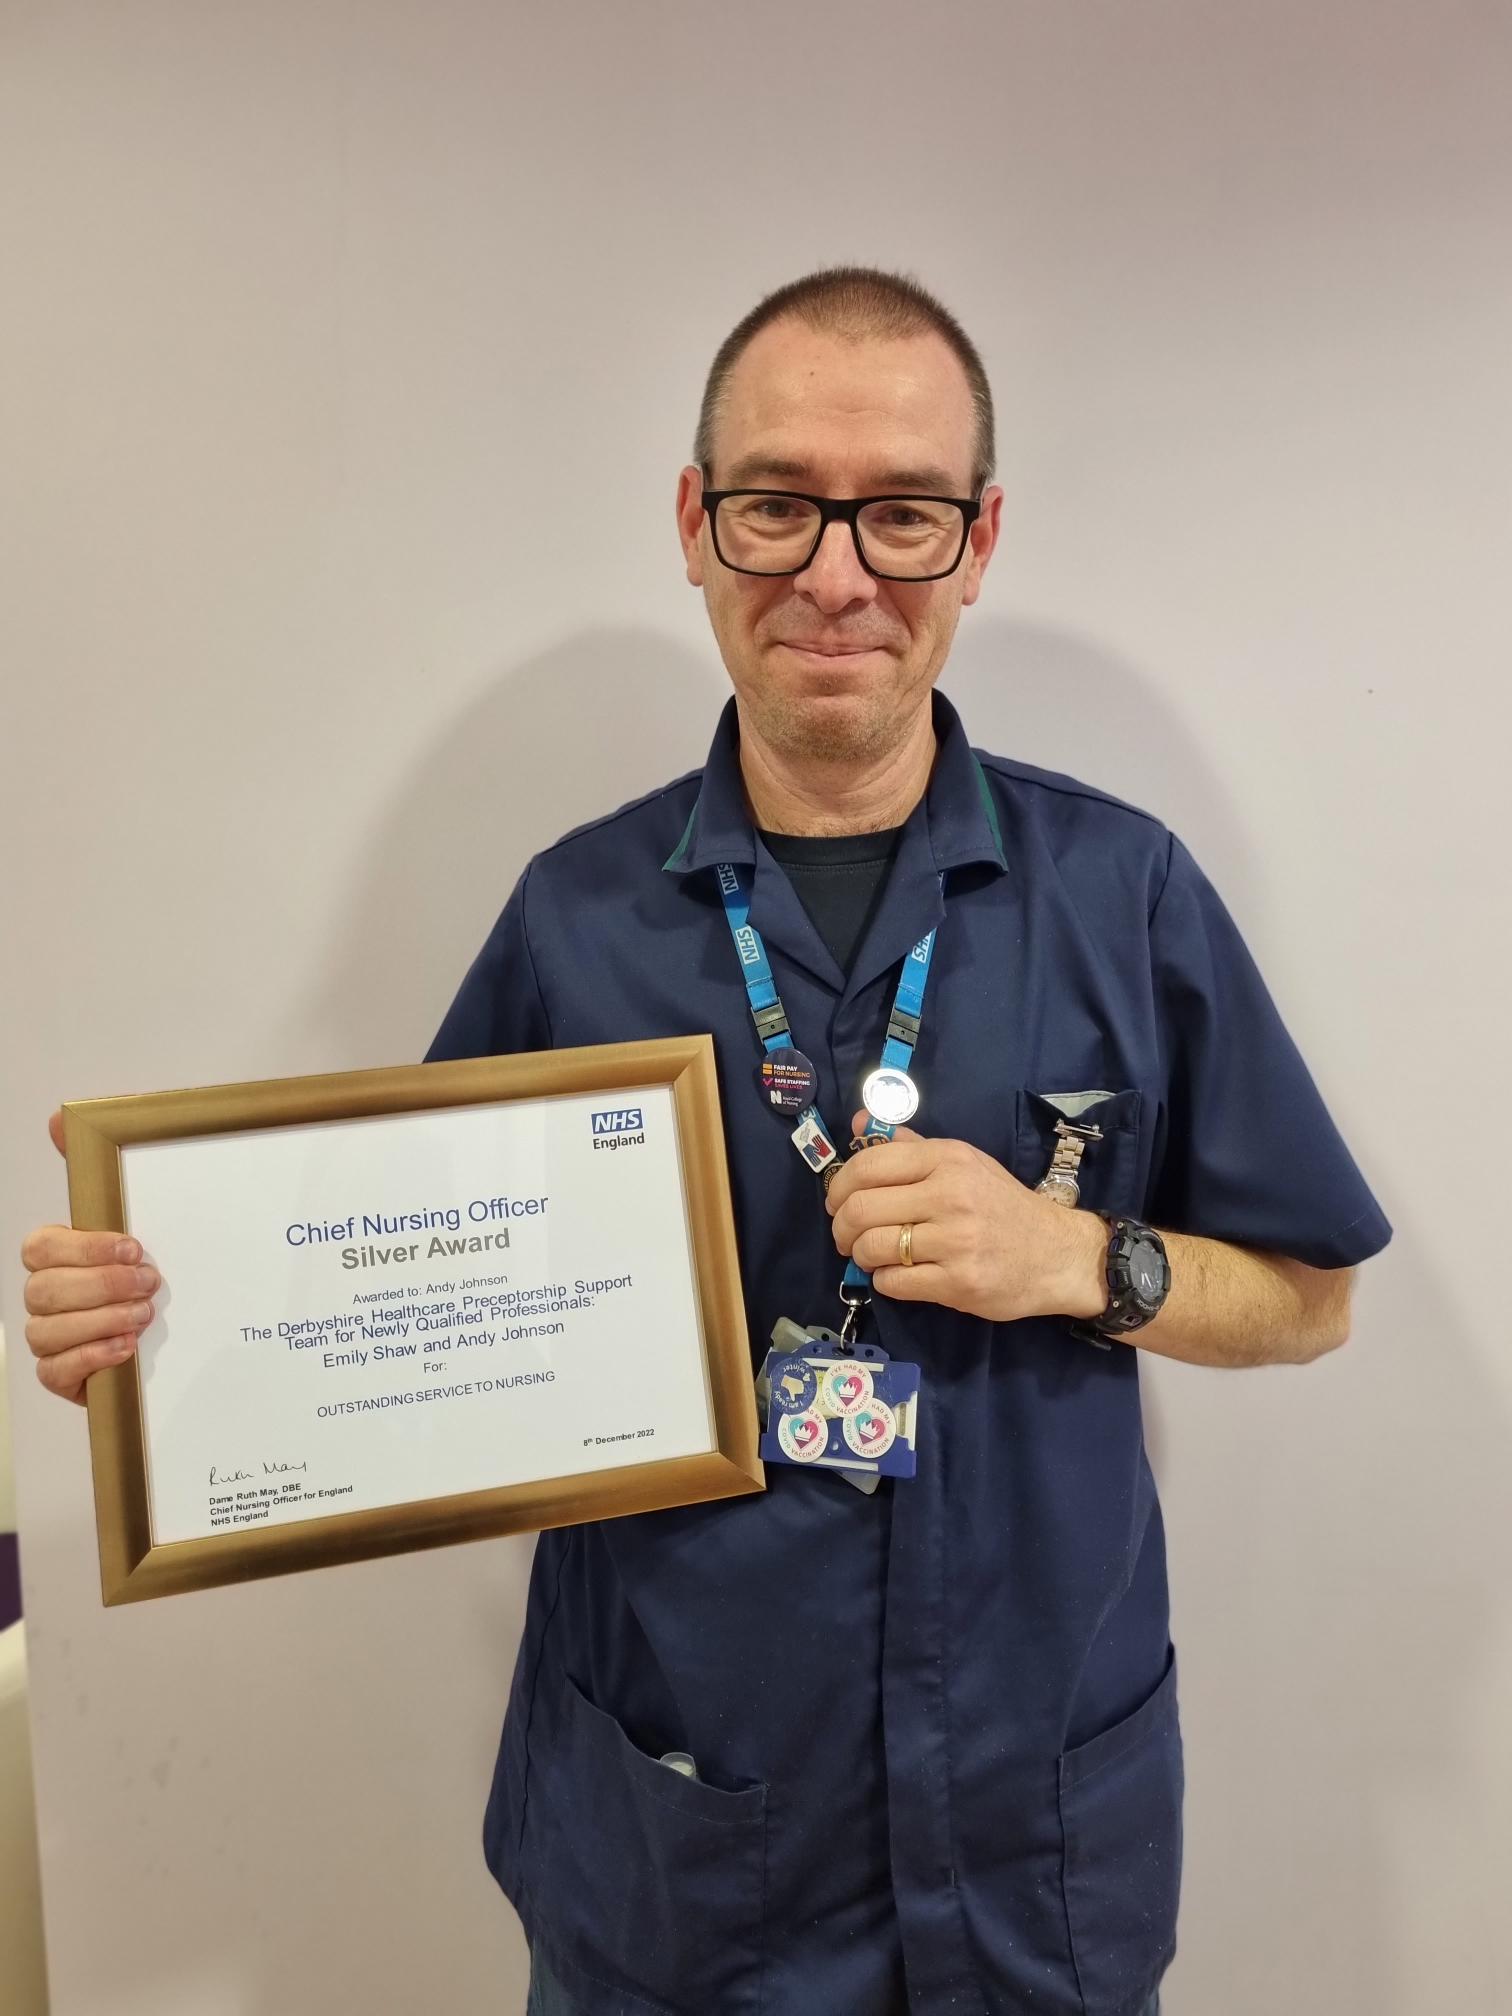 England’s top nurse awards Derbyshire Healthcare duo with Chief Nursing Officer Award